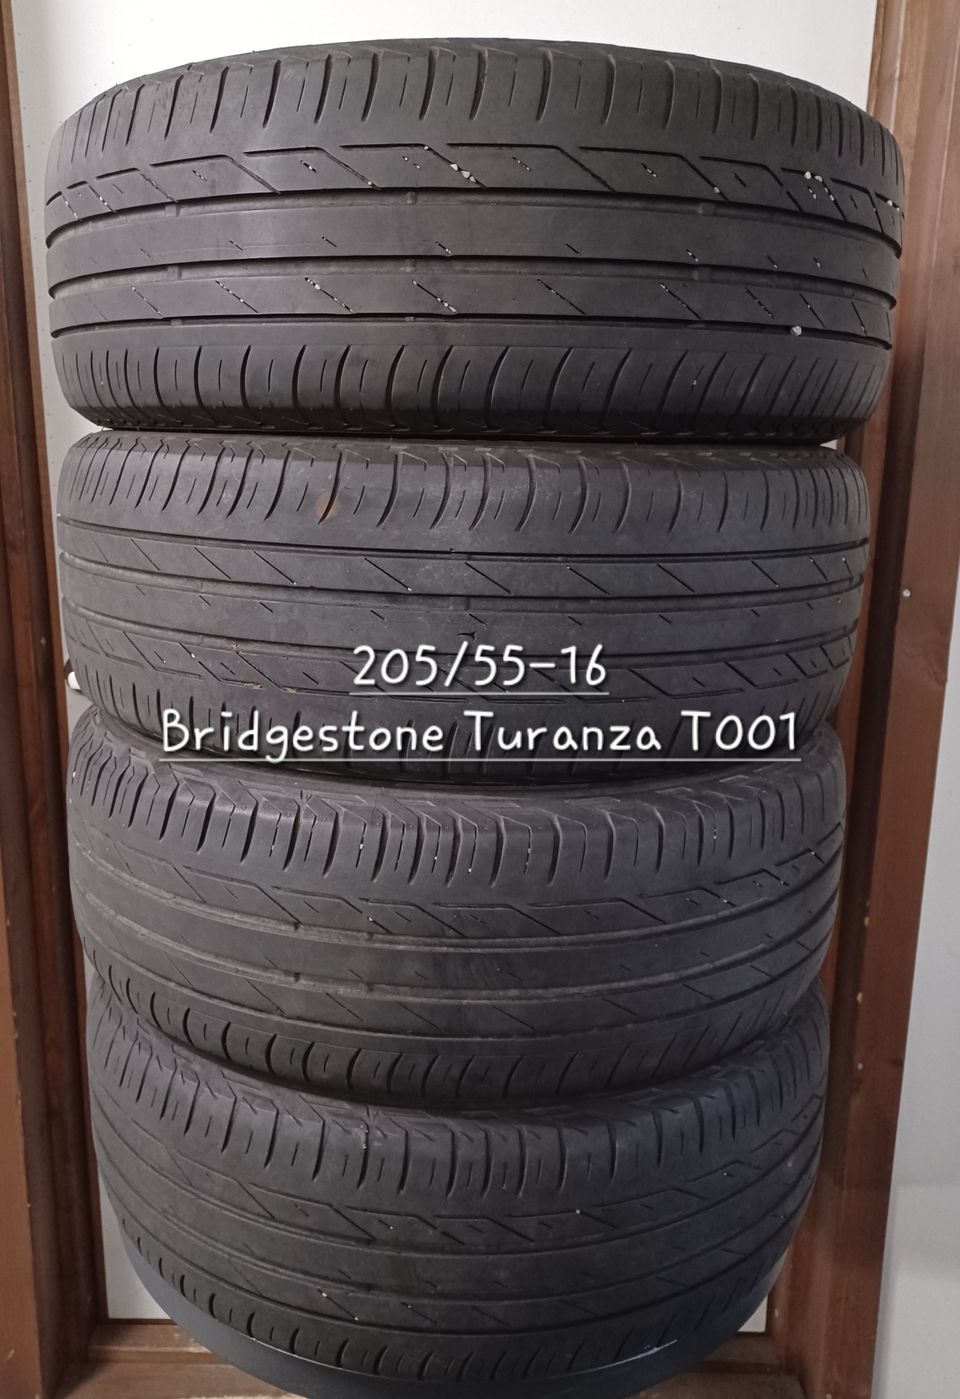 205/55-16 Bridgestone Turanza T001